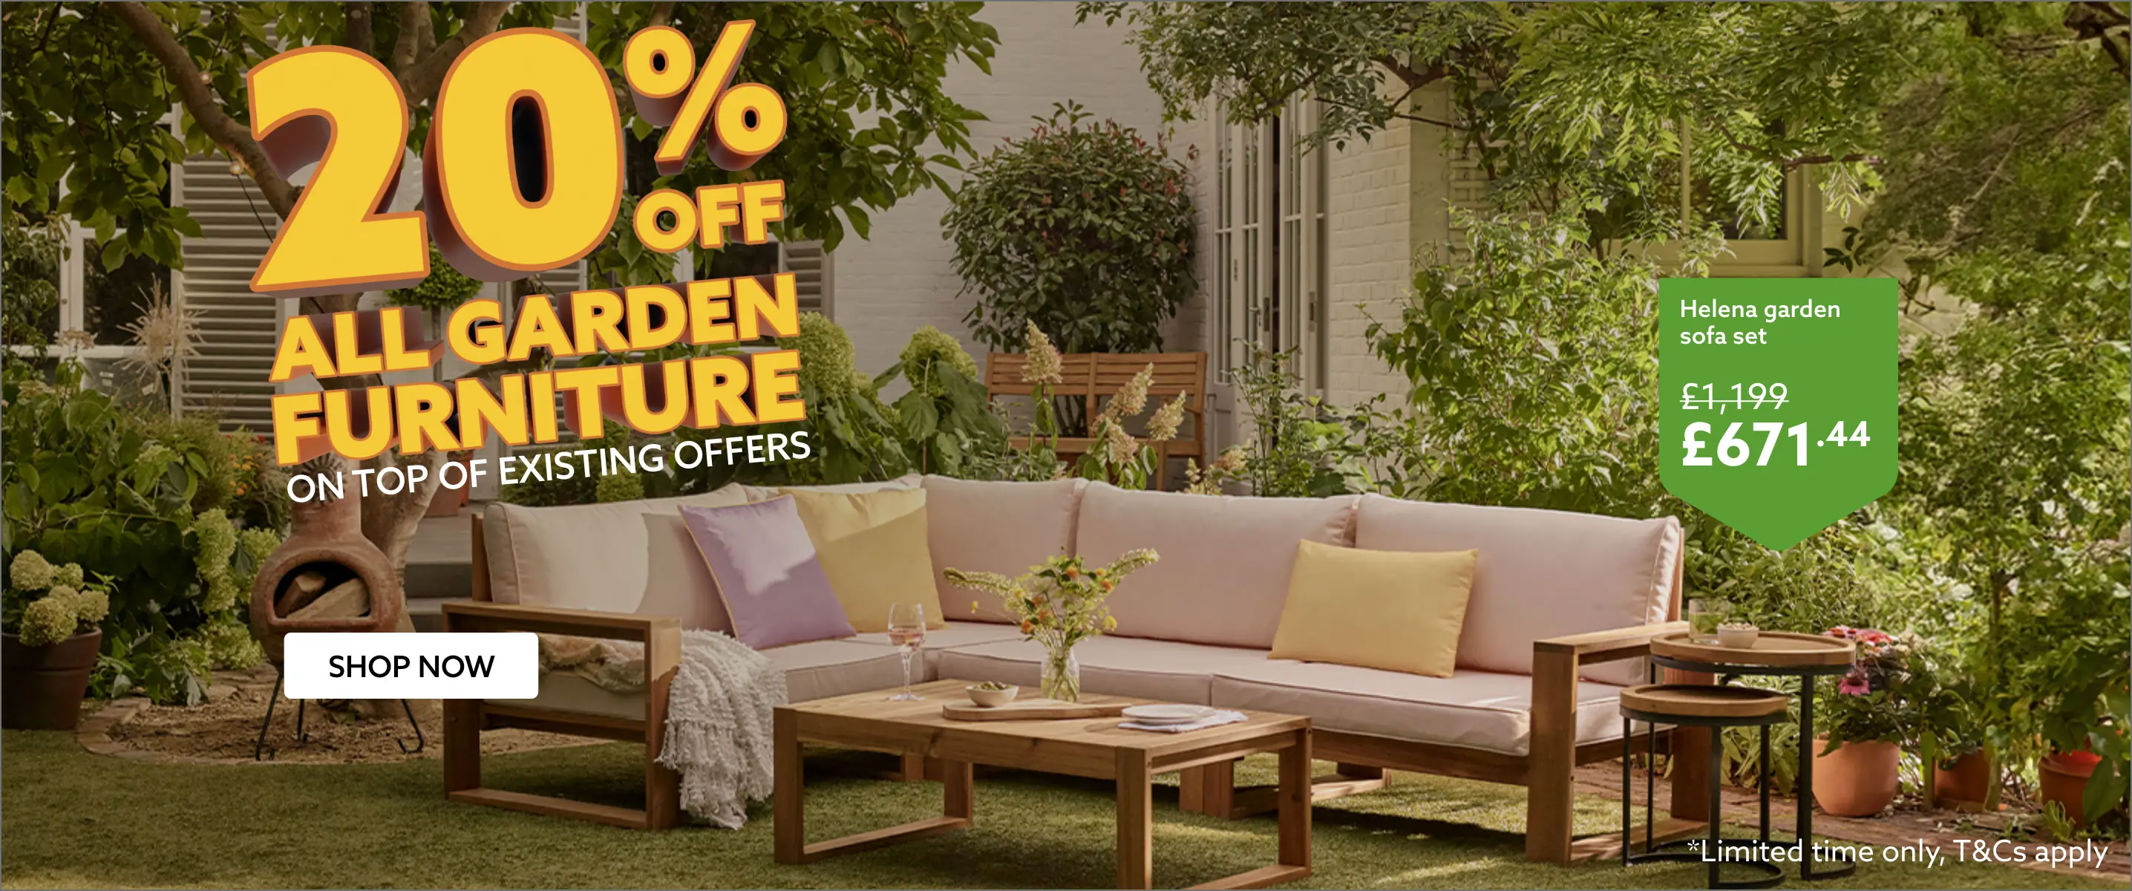 20% OFF All garden furniture